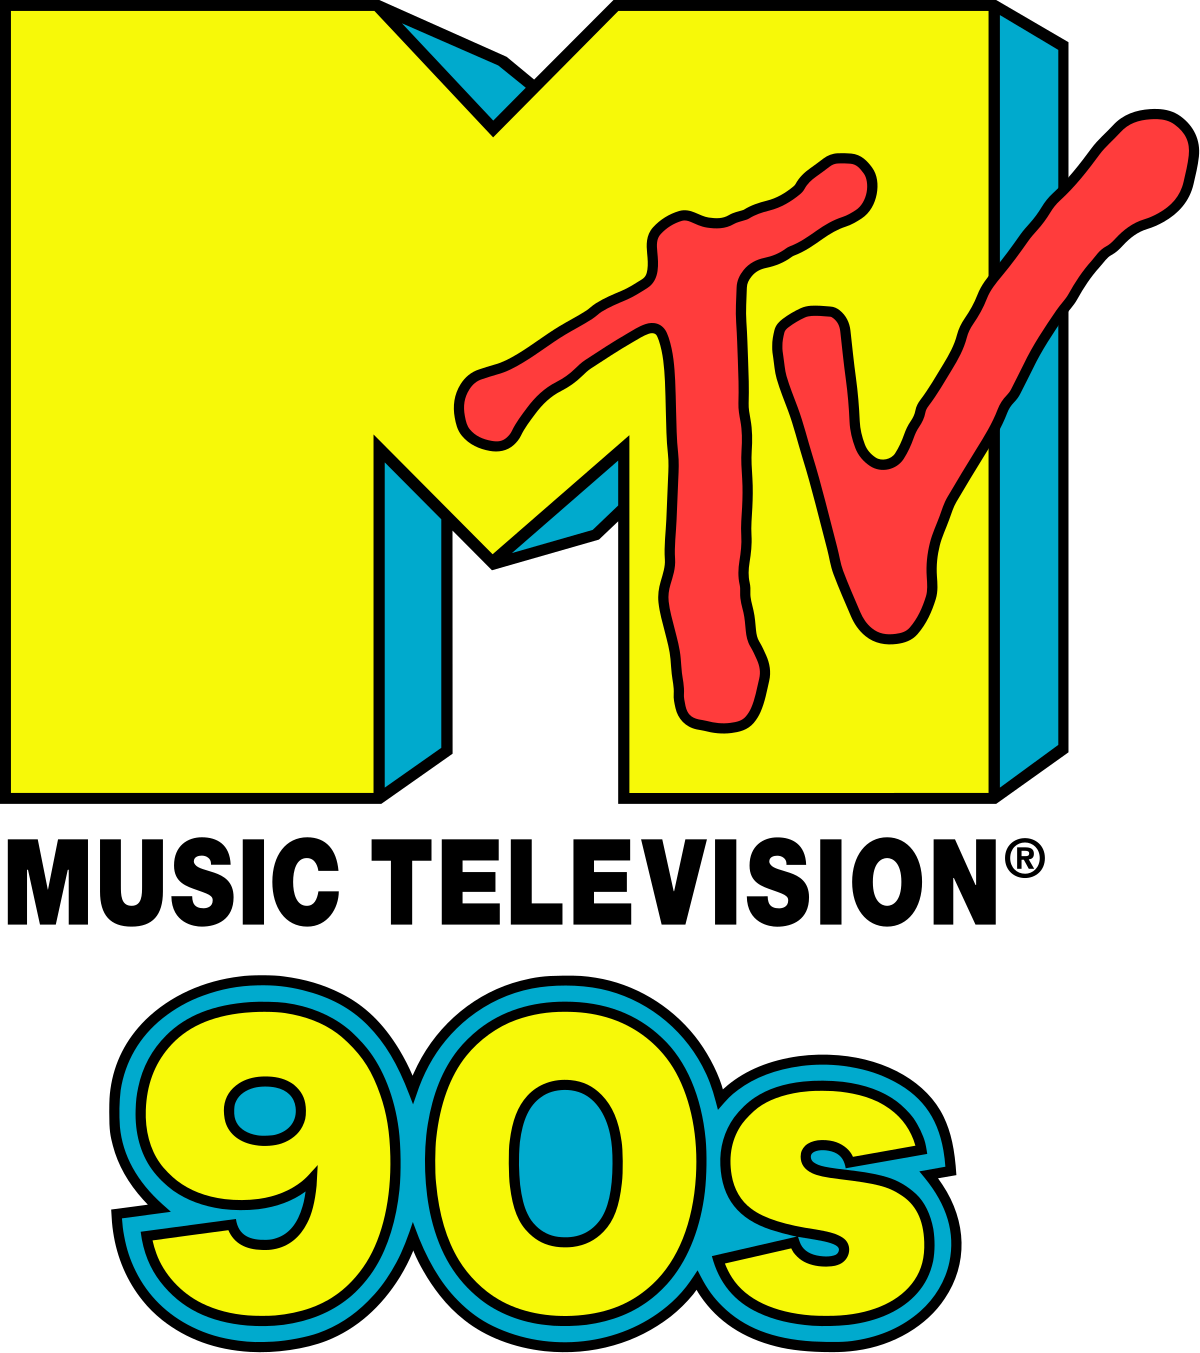 MTV (Lithuanian & Latvian TV channel) - Wikipedia